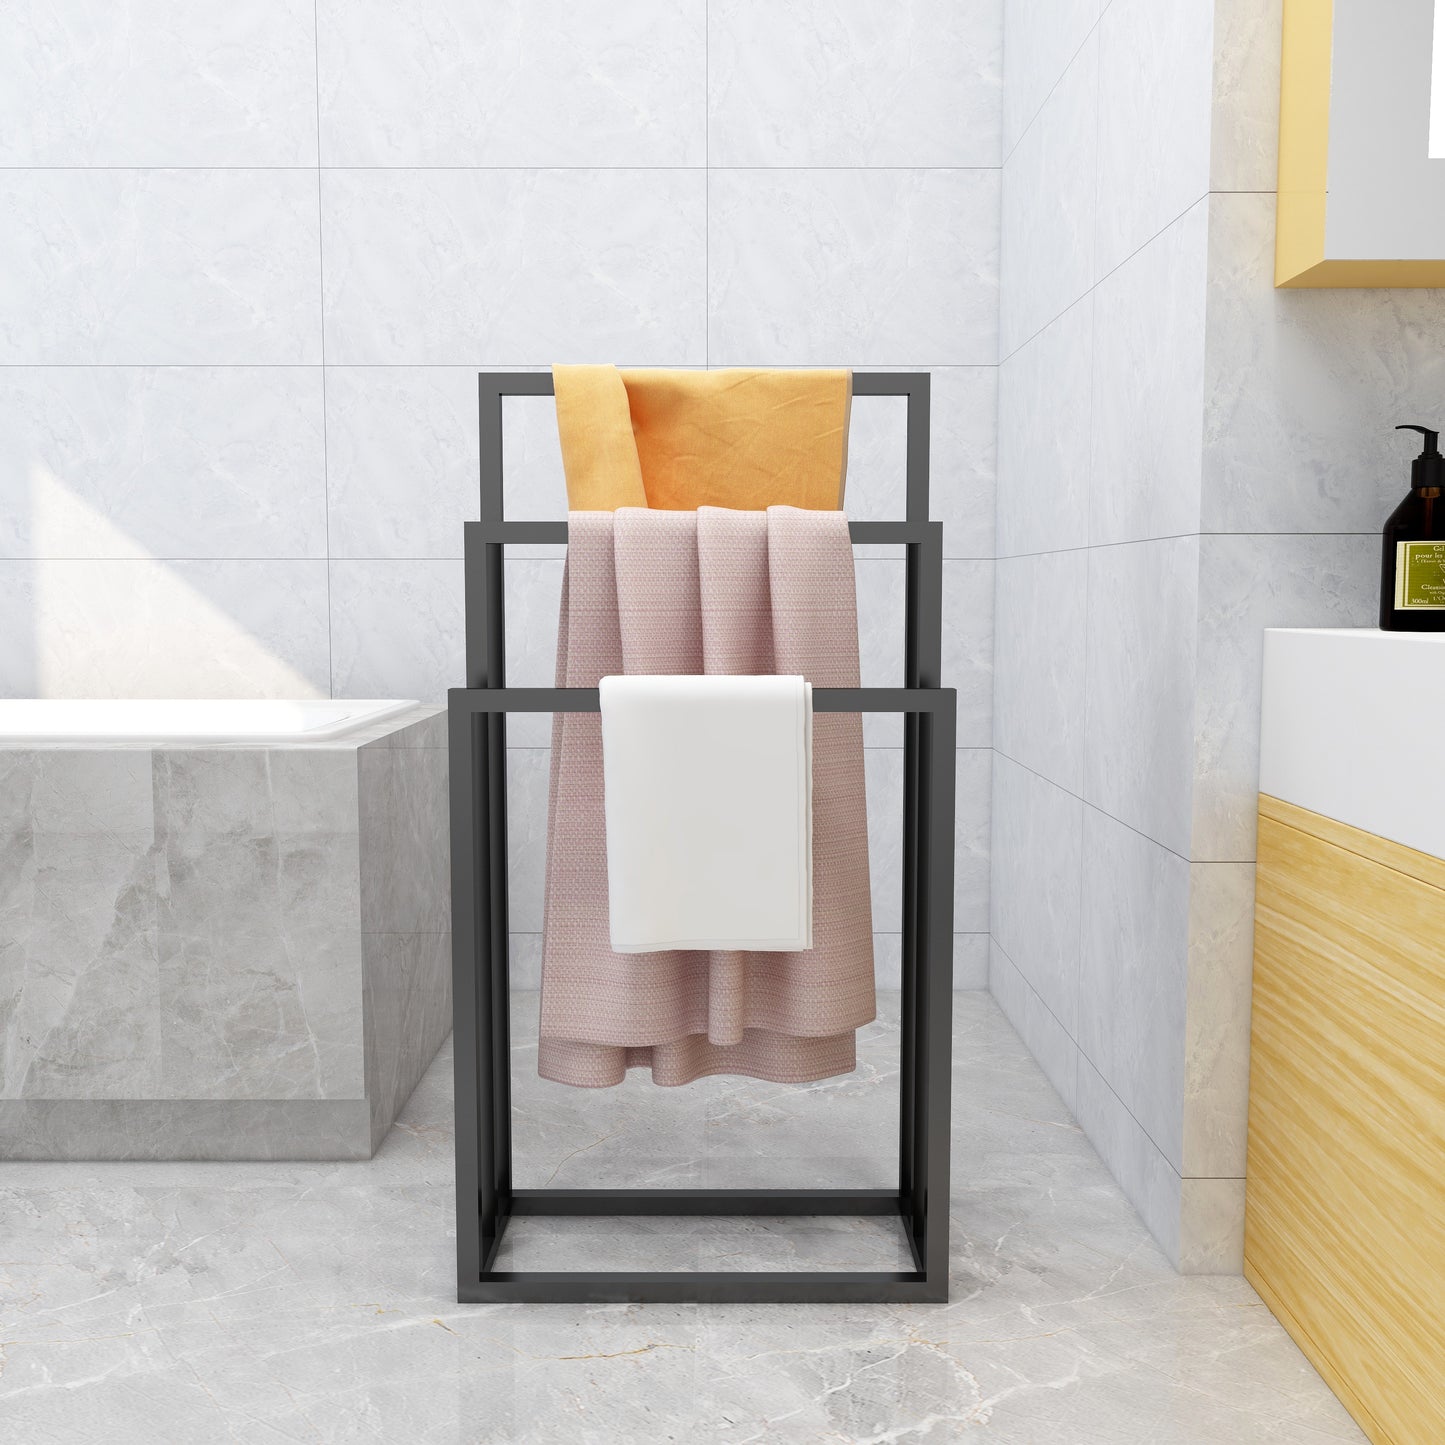 Metal Freestanding Towel Rack 3 Tiers Hand Towel Holder Organizer Bathroom Accessories, Black